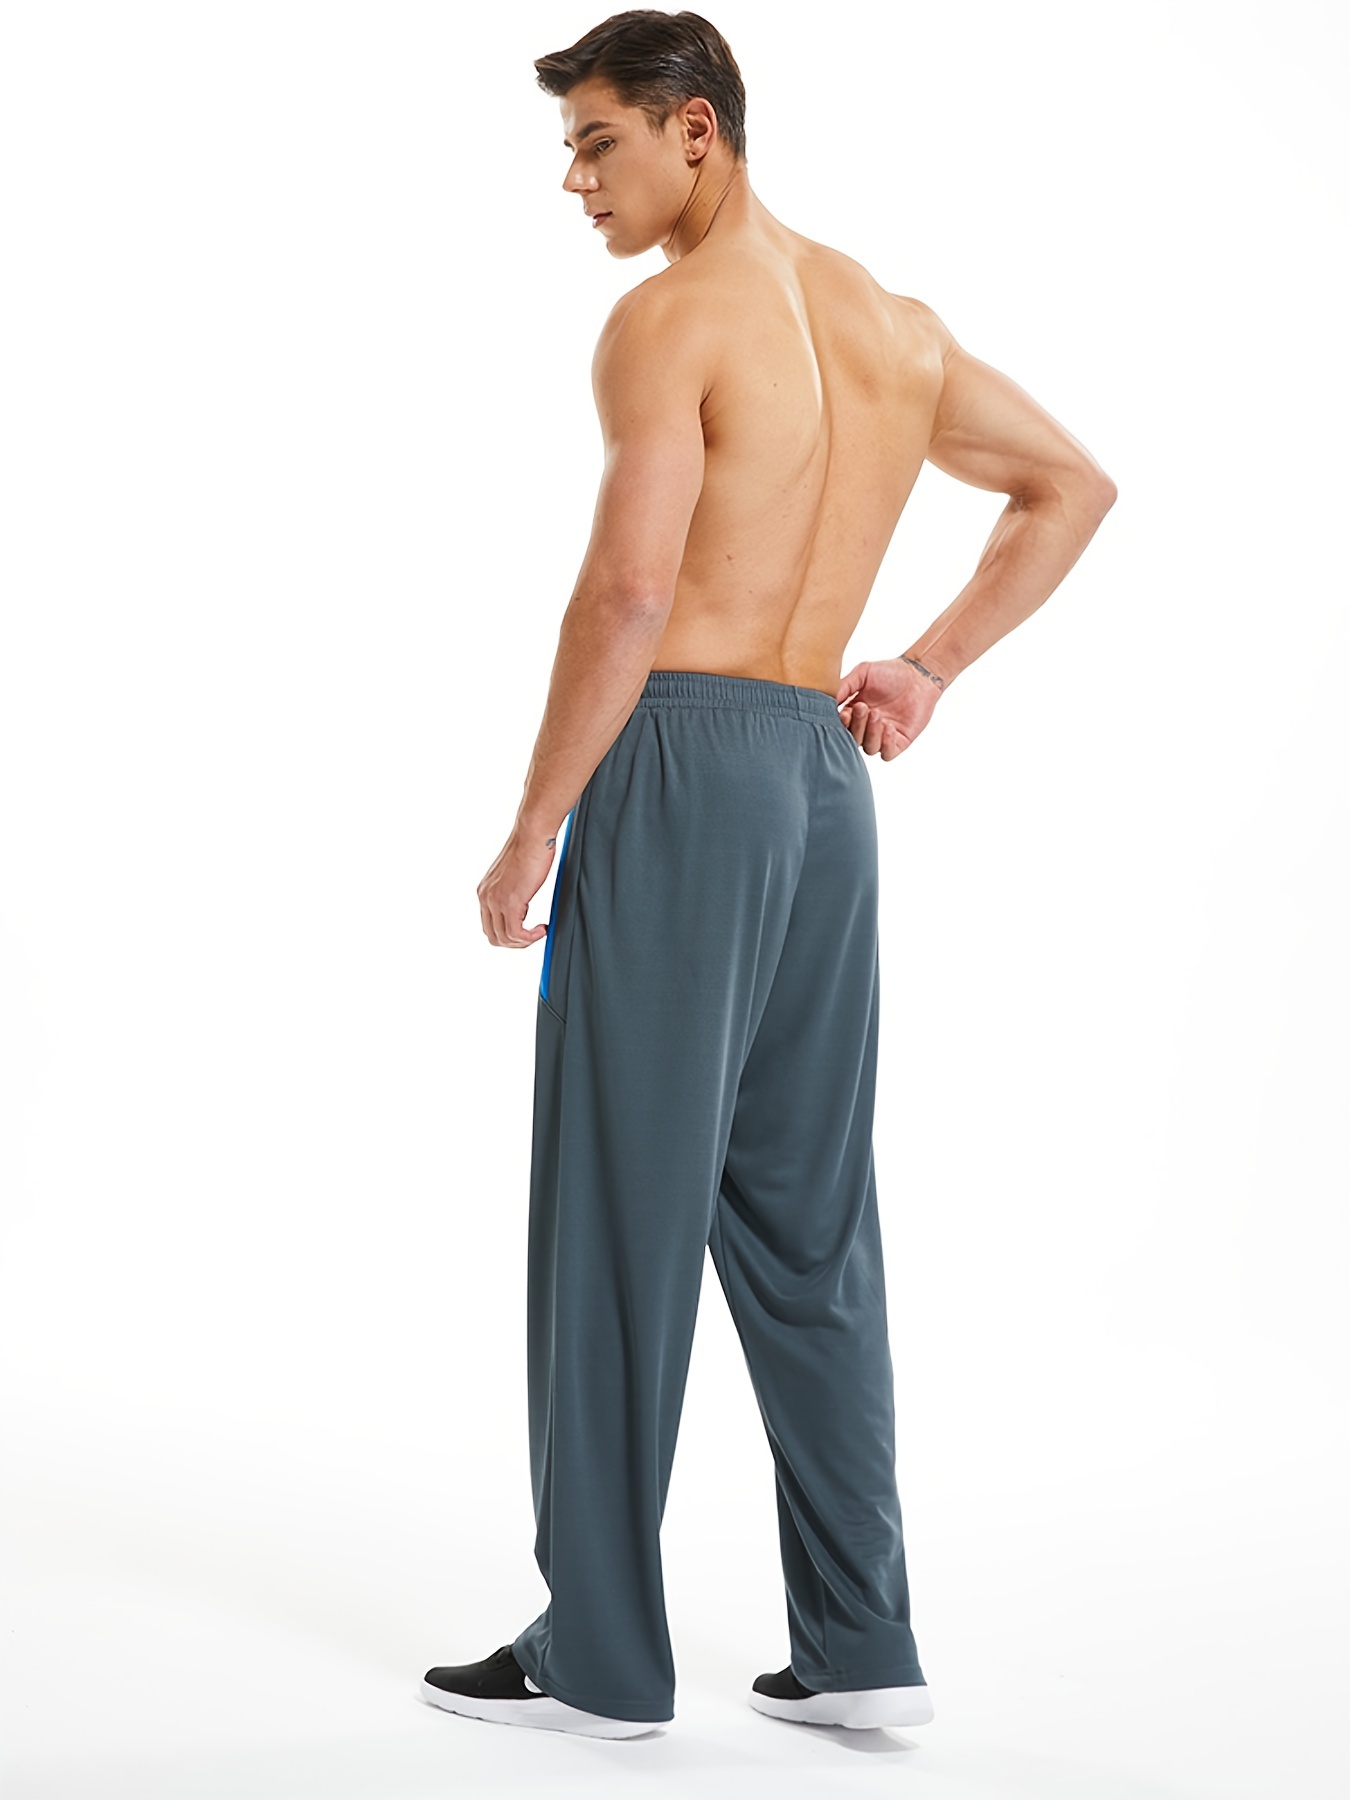 ZENGVEE Men'S Sweatpants With Zipper Pockets Open Bottom Athletic Pants For  Jogging, Workout, Gym, Running, Training